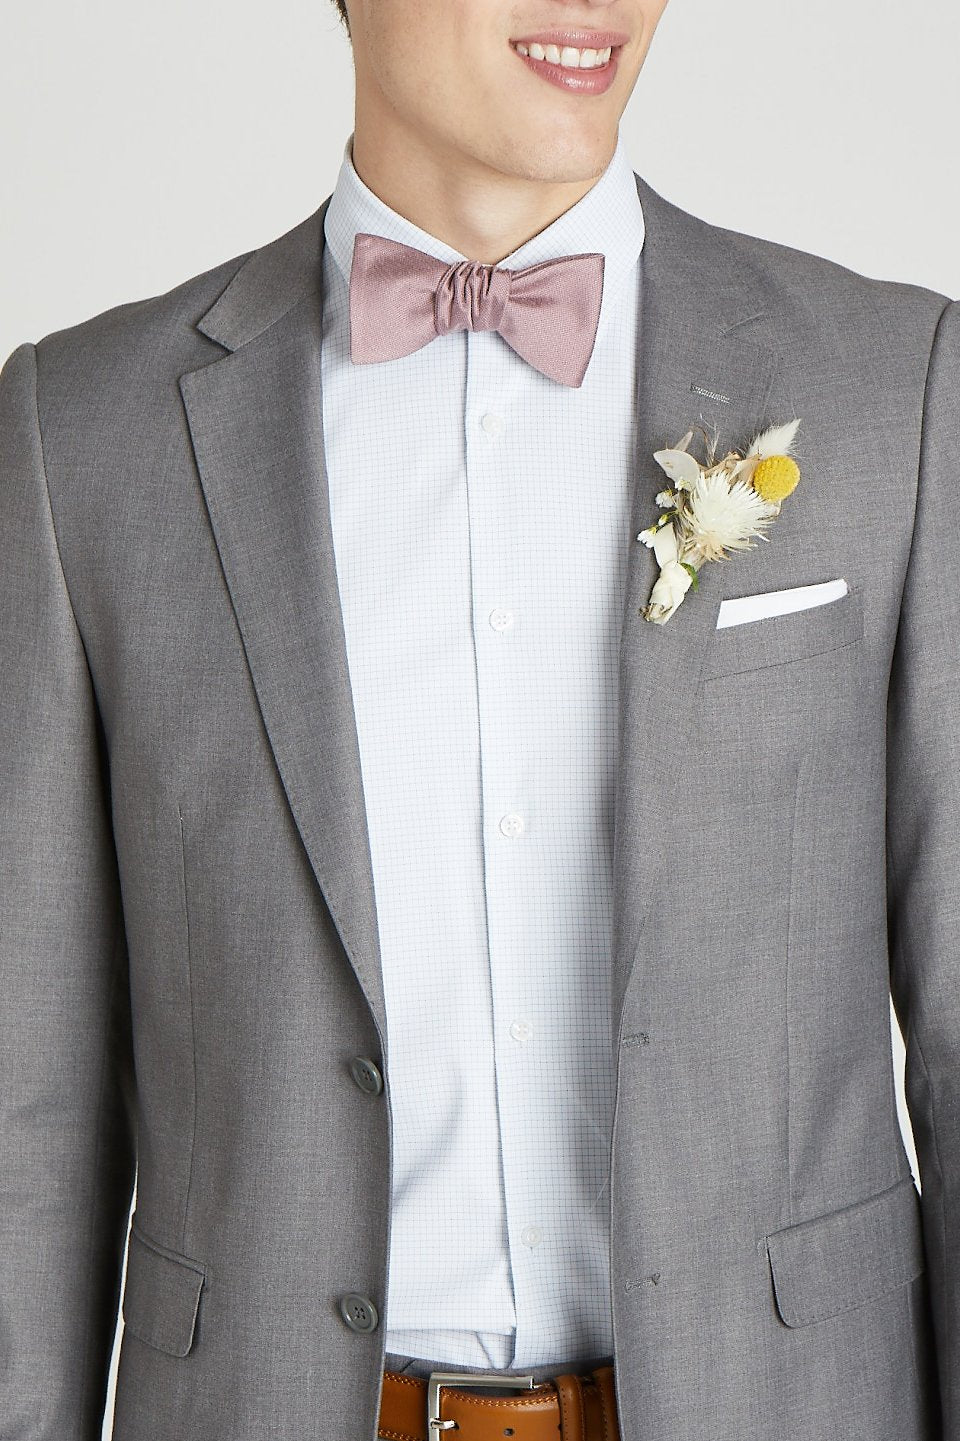 Black Tie Suits | Design your Tuxedo - Hockerty